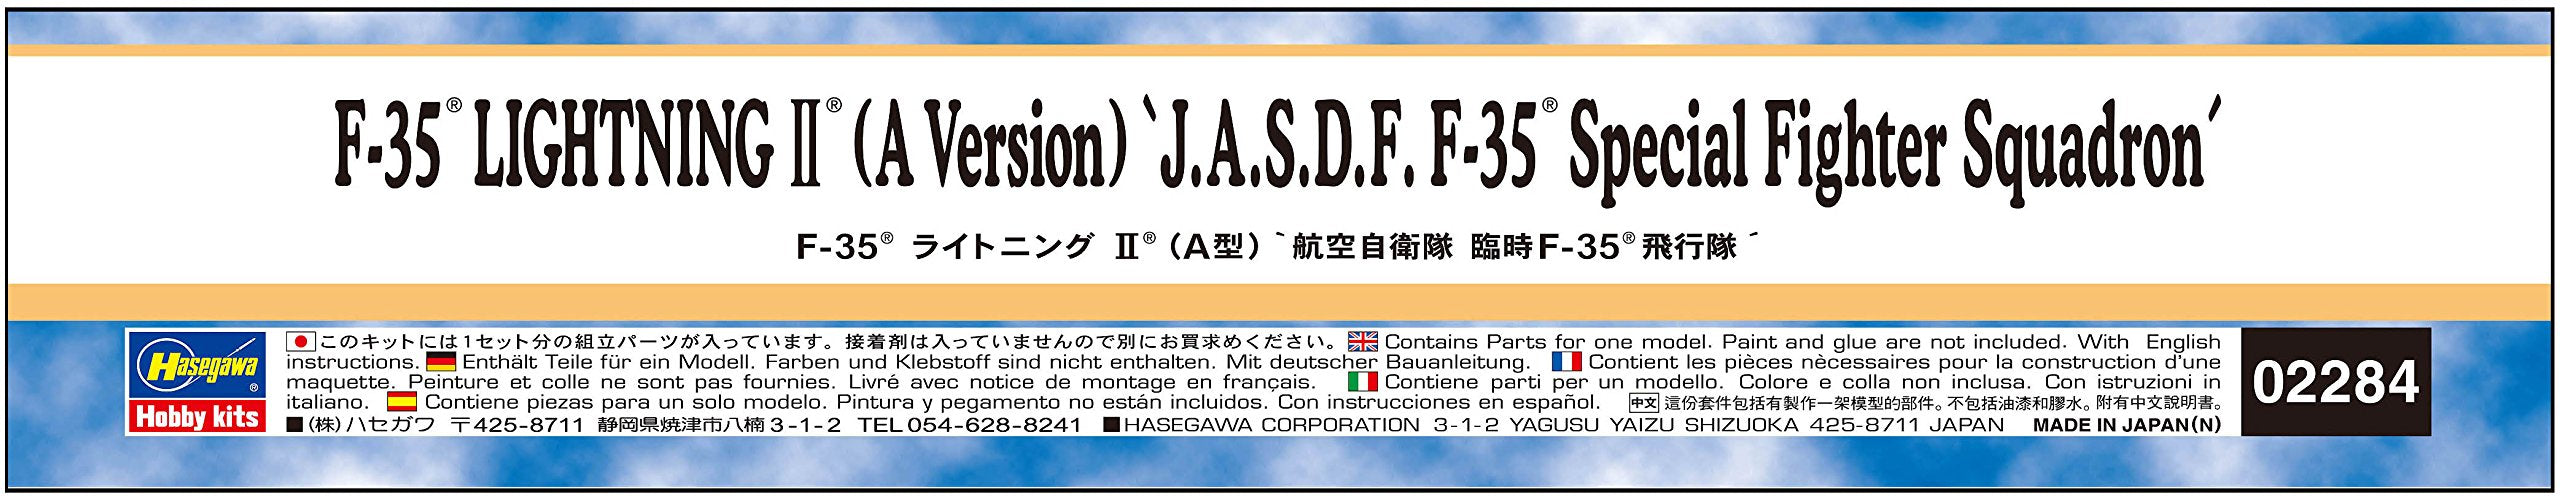 HASEGAWA 02284 F-35 Lightning II A Ver. 'Jasdf F-35 Special Fighter Squadron' Bausatz im Maßstab 1:72